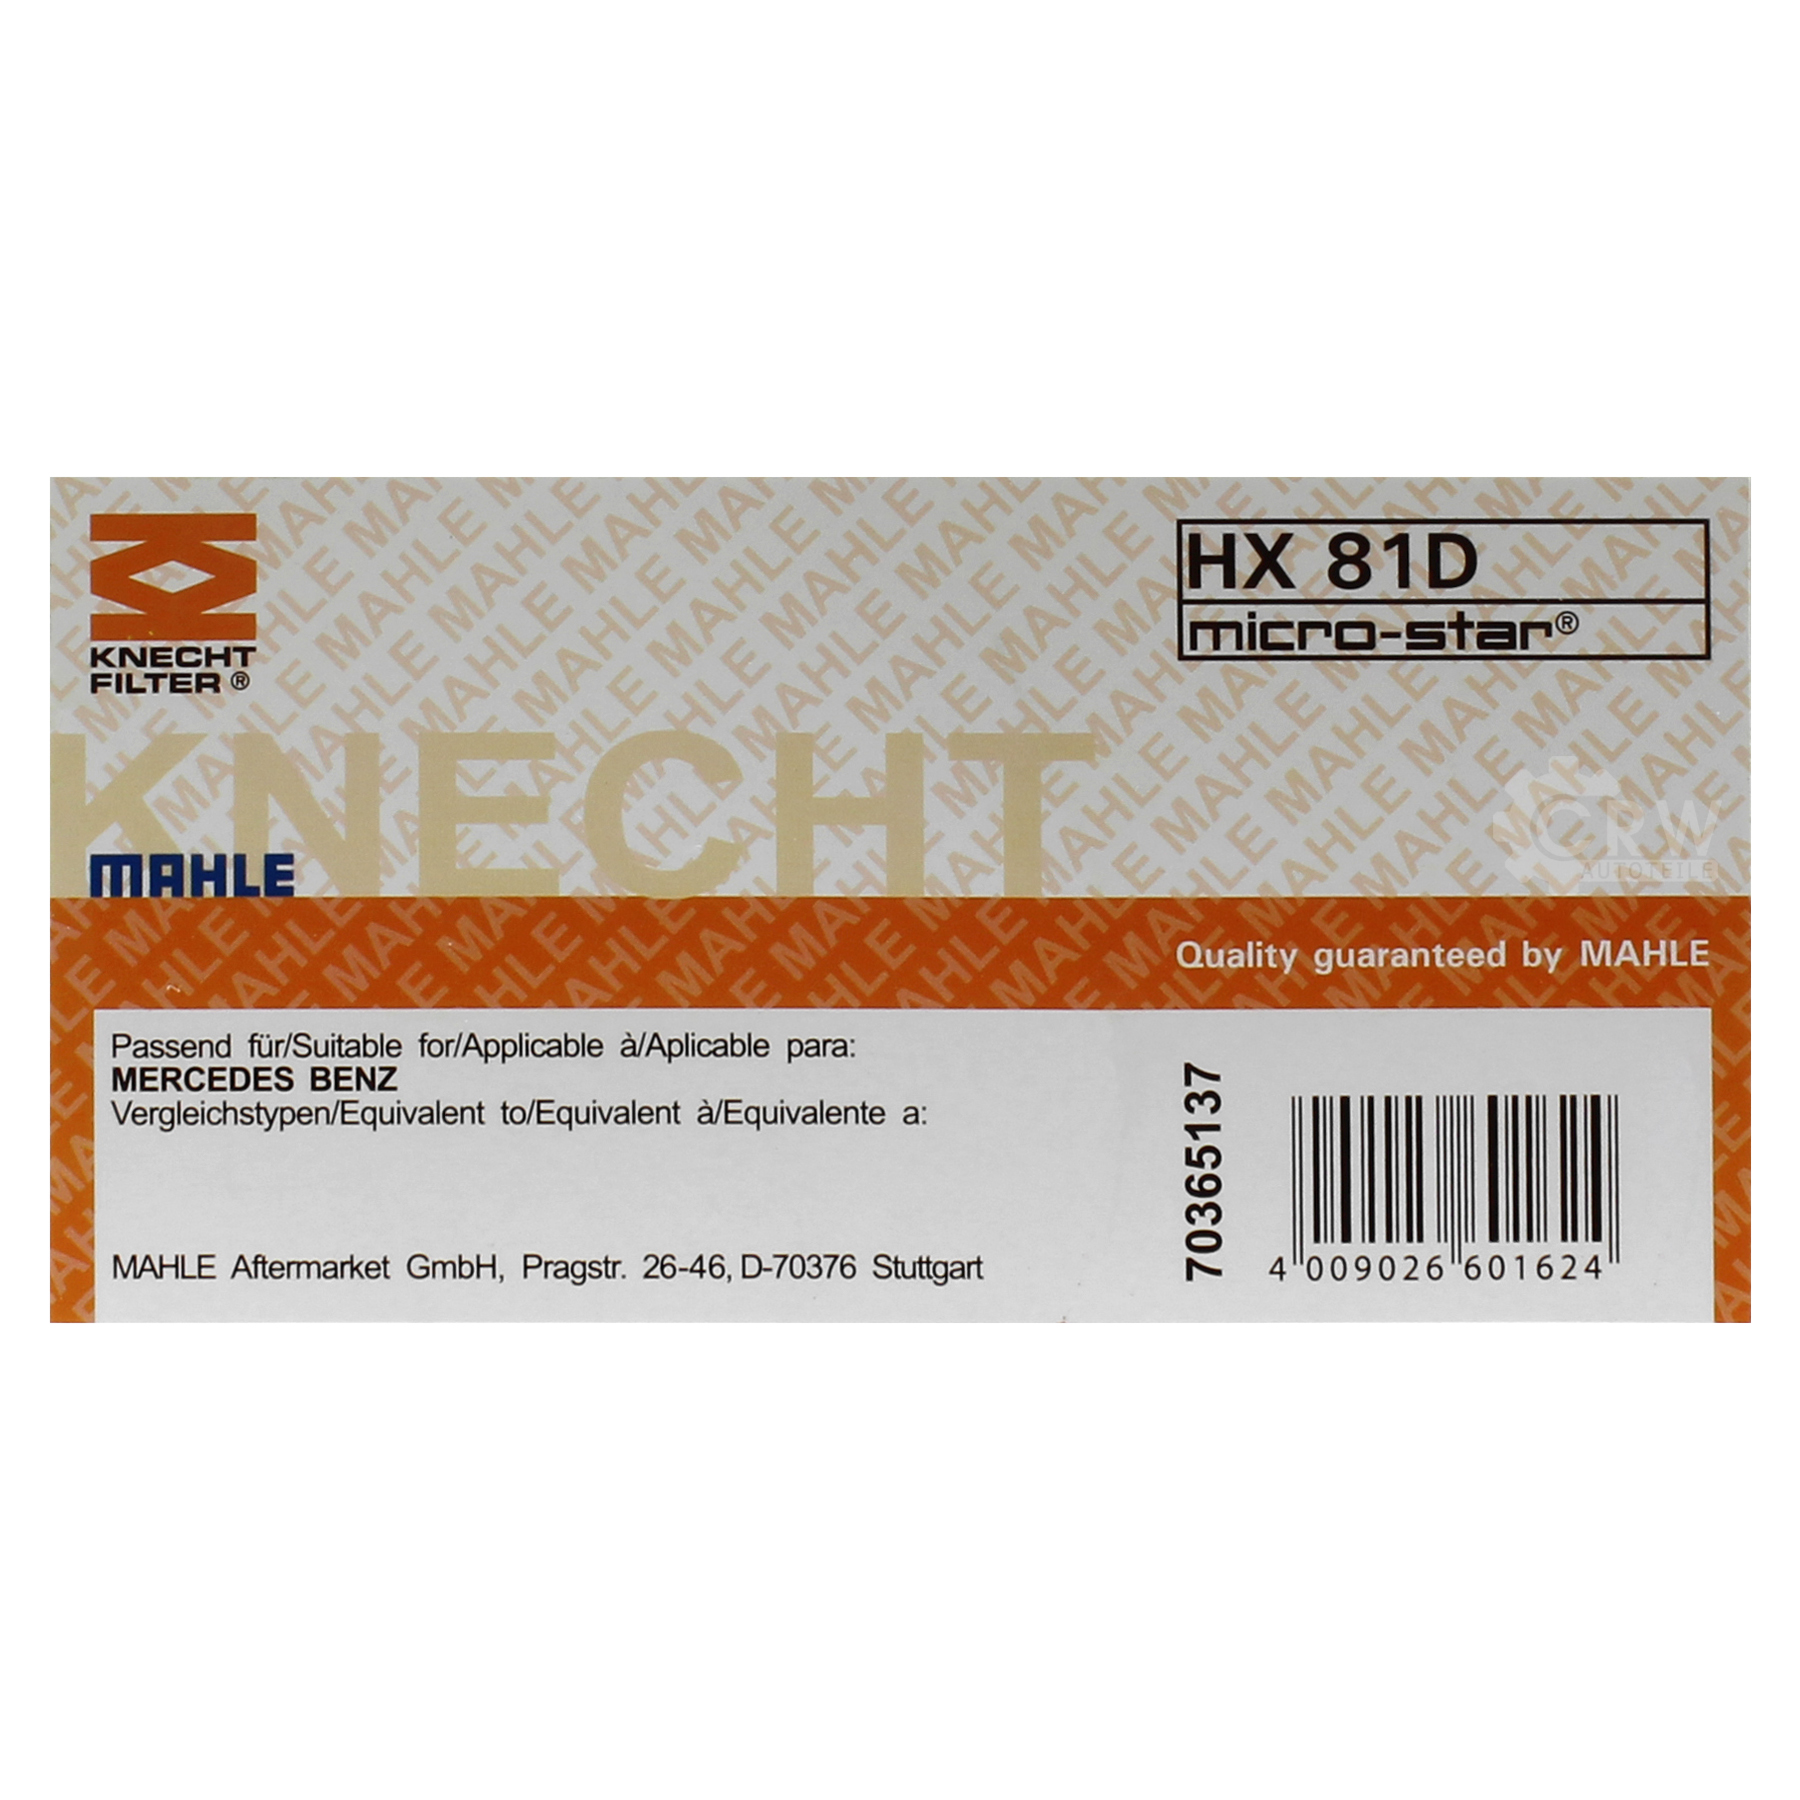 MAHLE / KNECHT HX 81D Hydraulikfilter für Automatikgetriebe